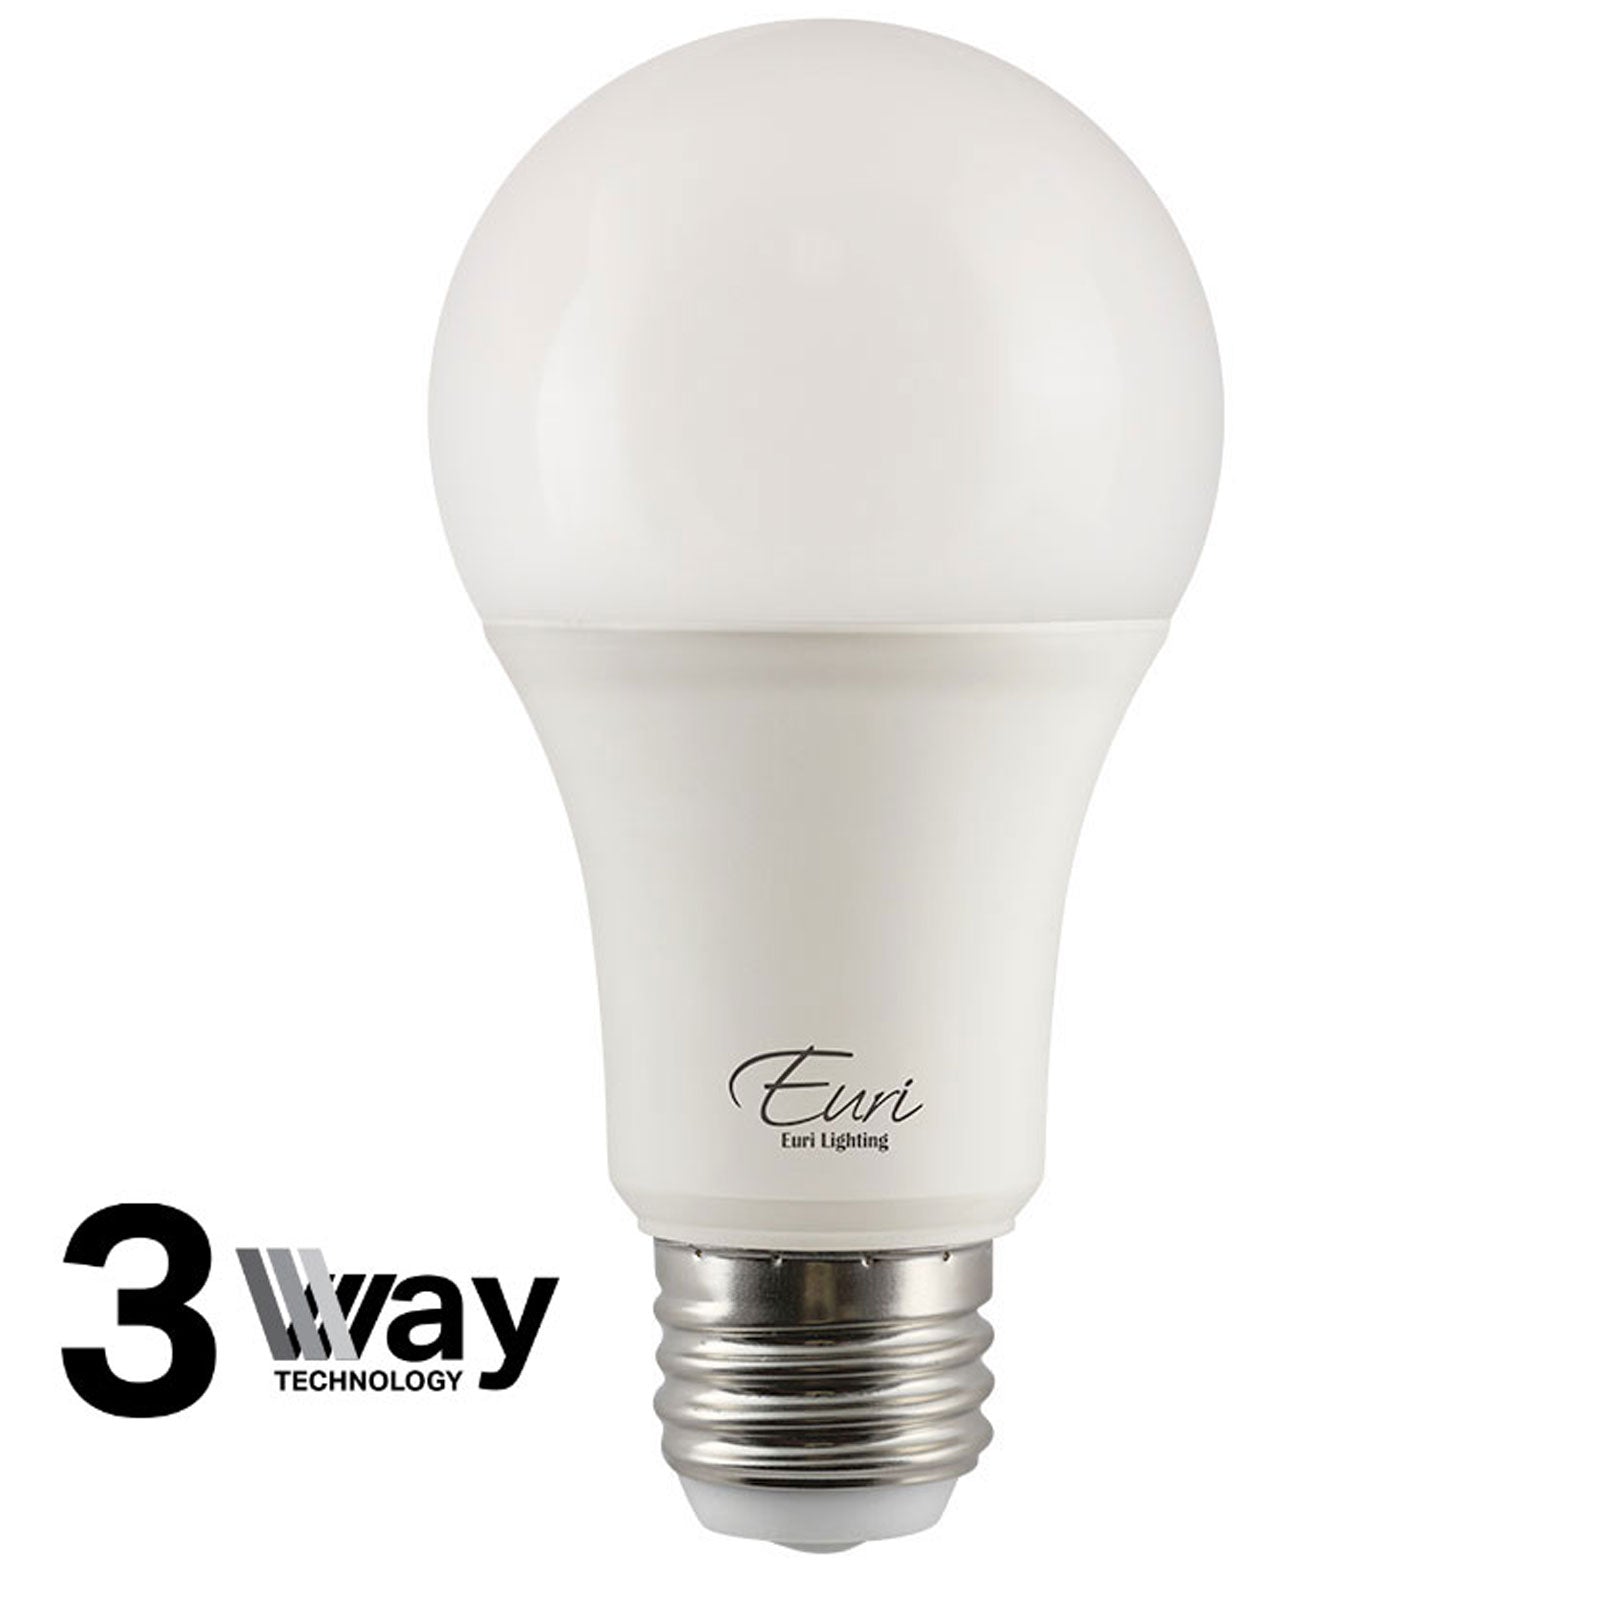 Barry upassende Pudsigt 40/60/80-Watt Equivalent 3-Way A19 E26 General Purpose LED Light Bulb